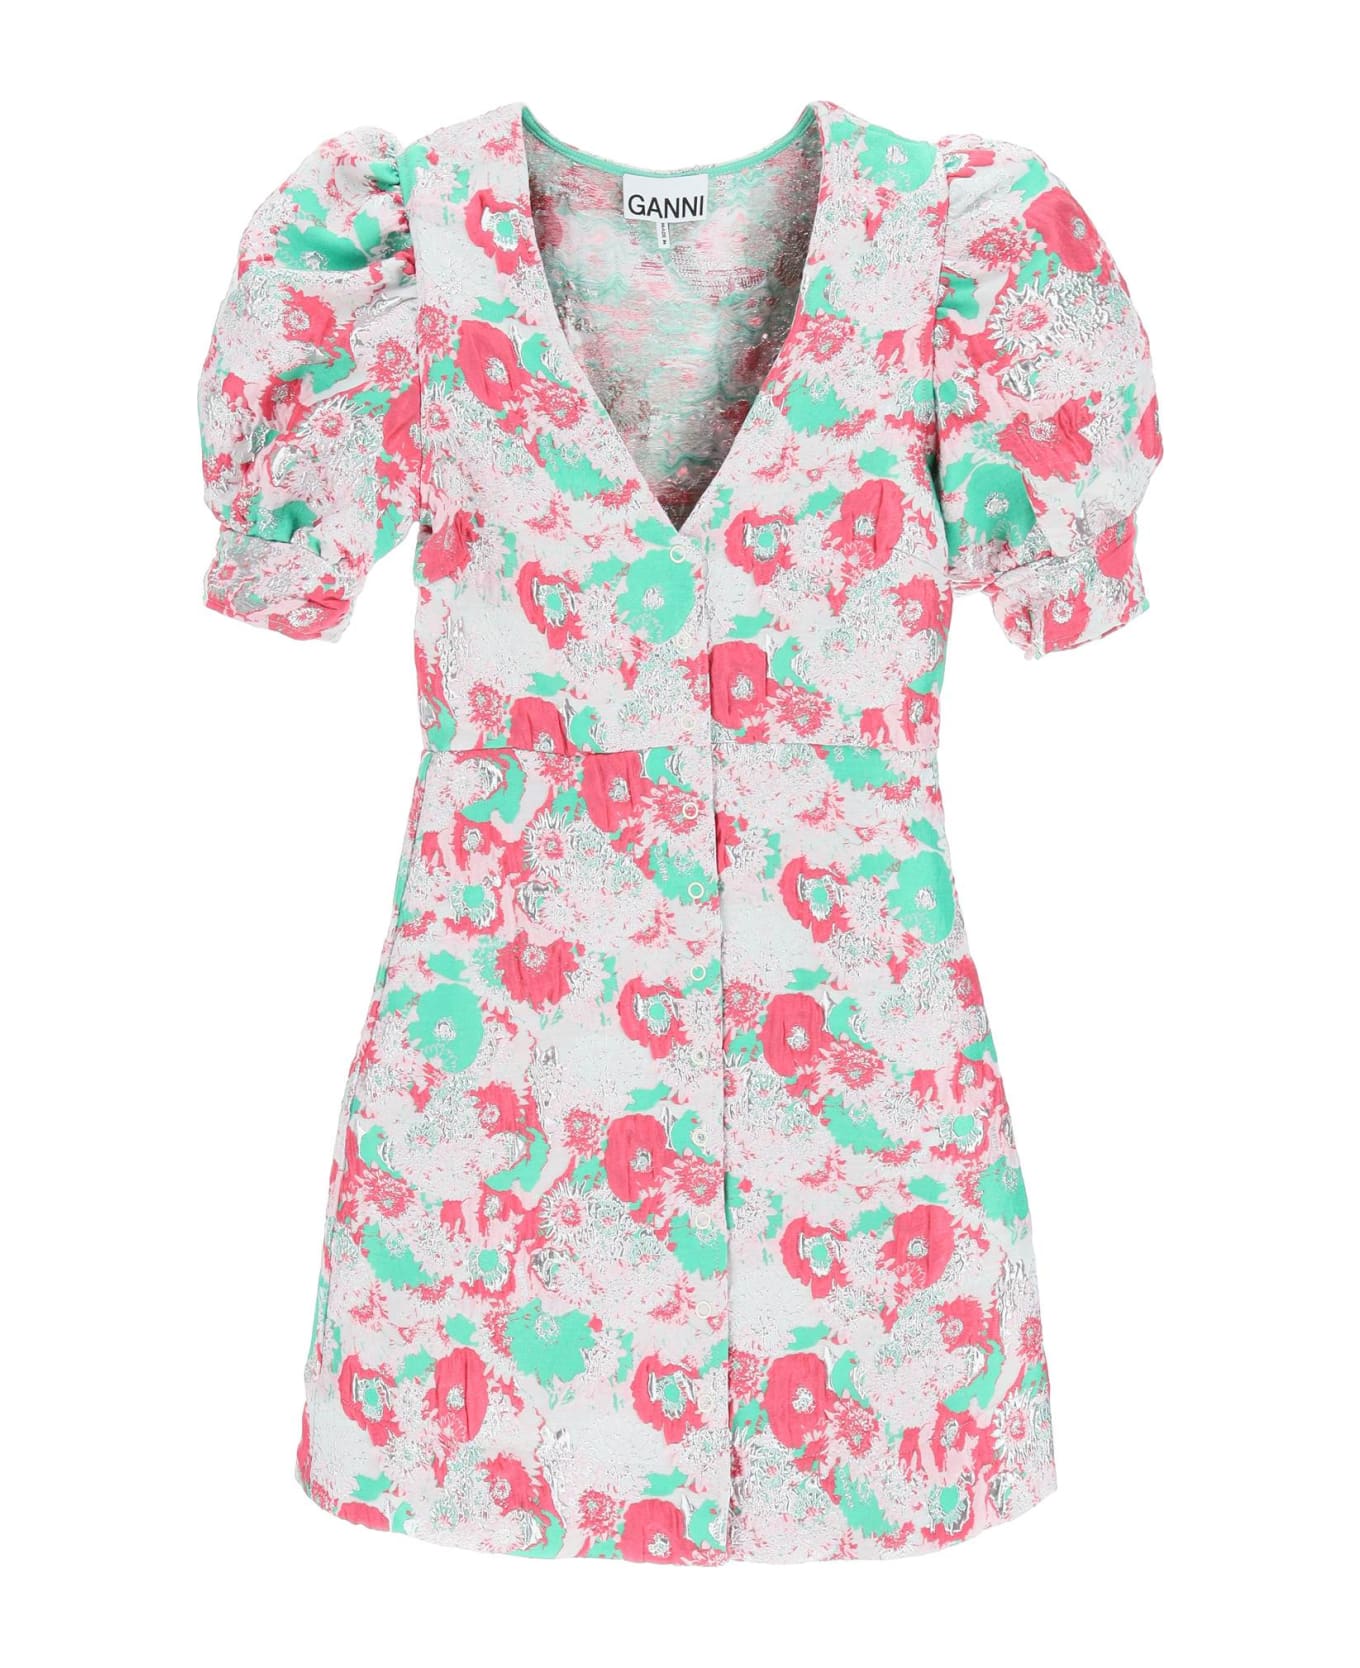 Ganni Jacquard Floral Dress - SUGAR PLUM (Pink)